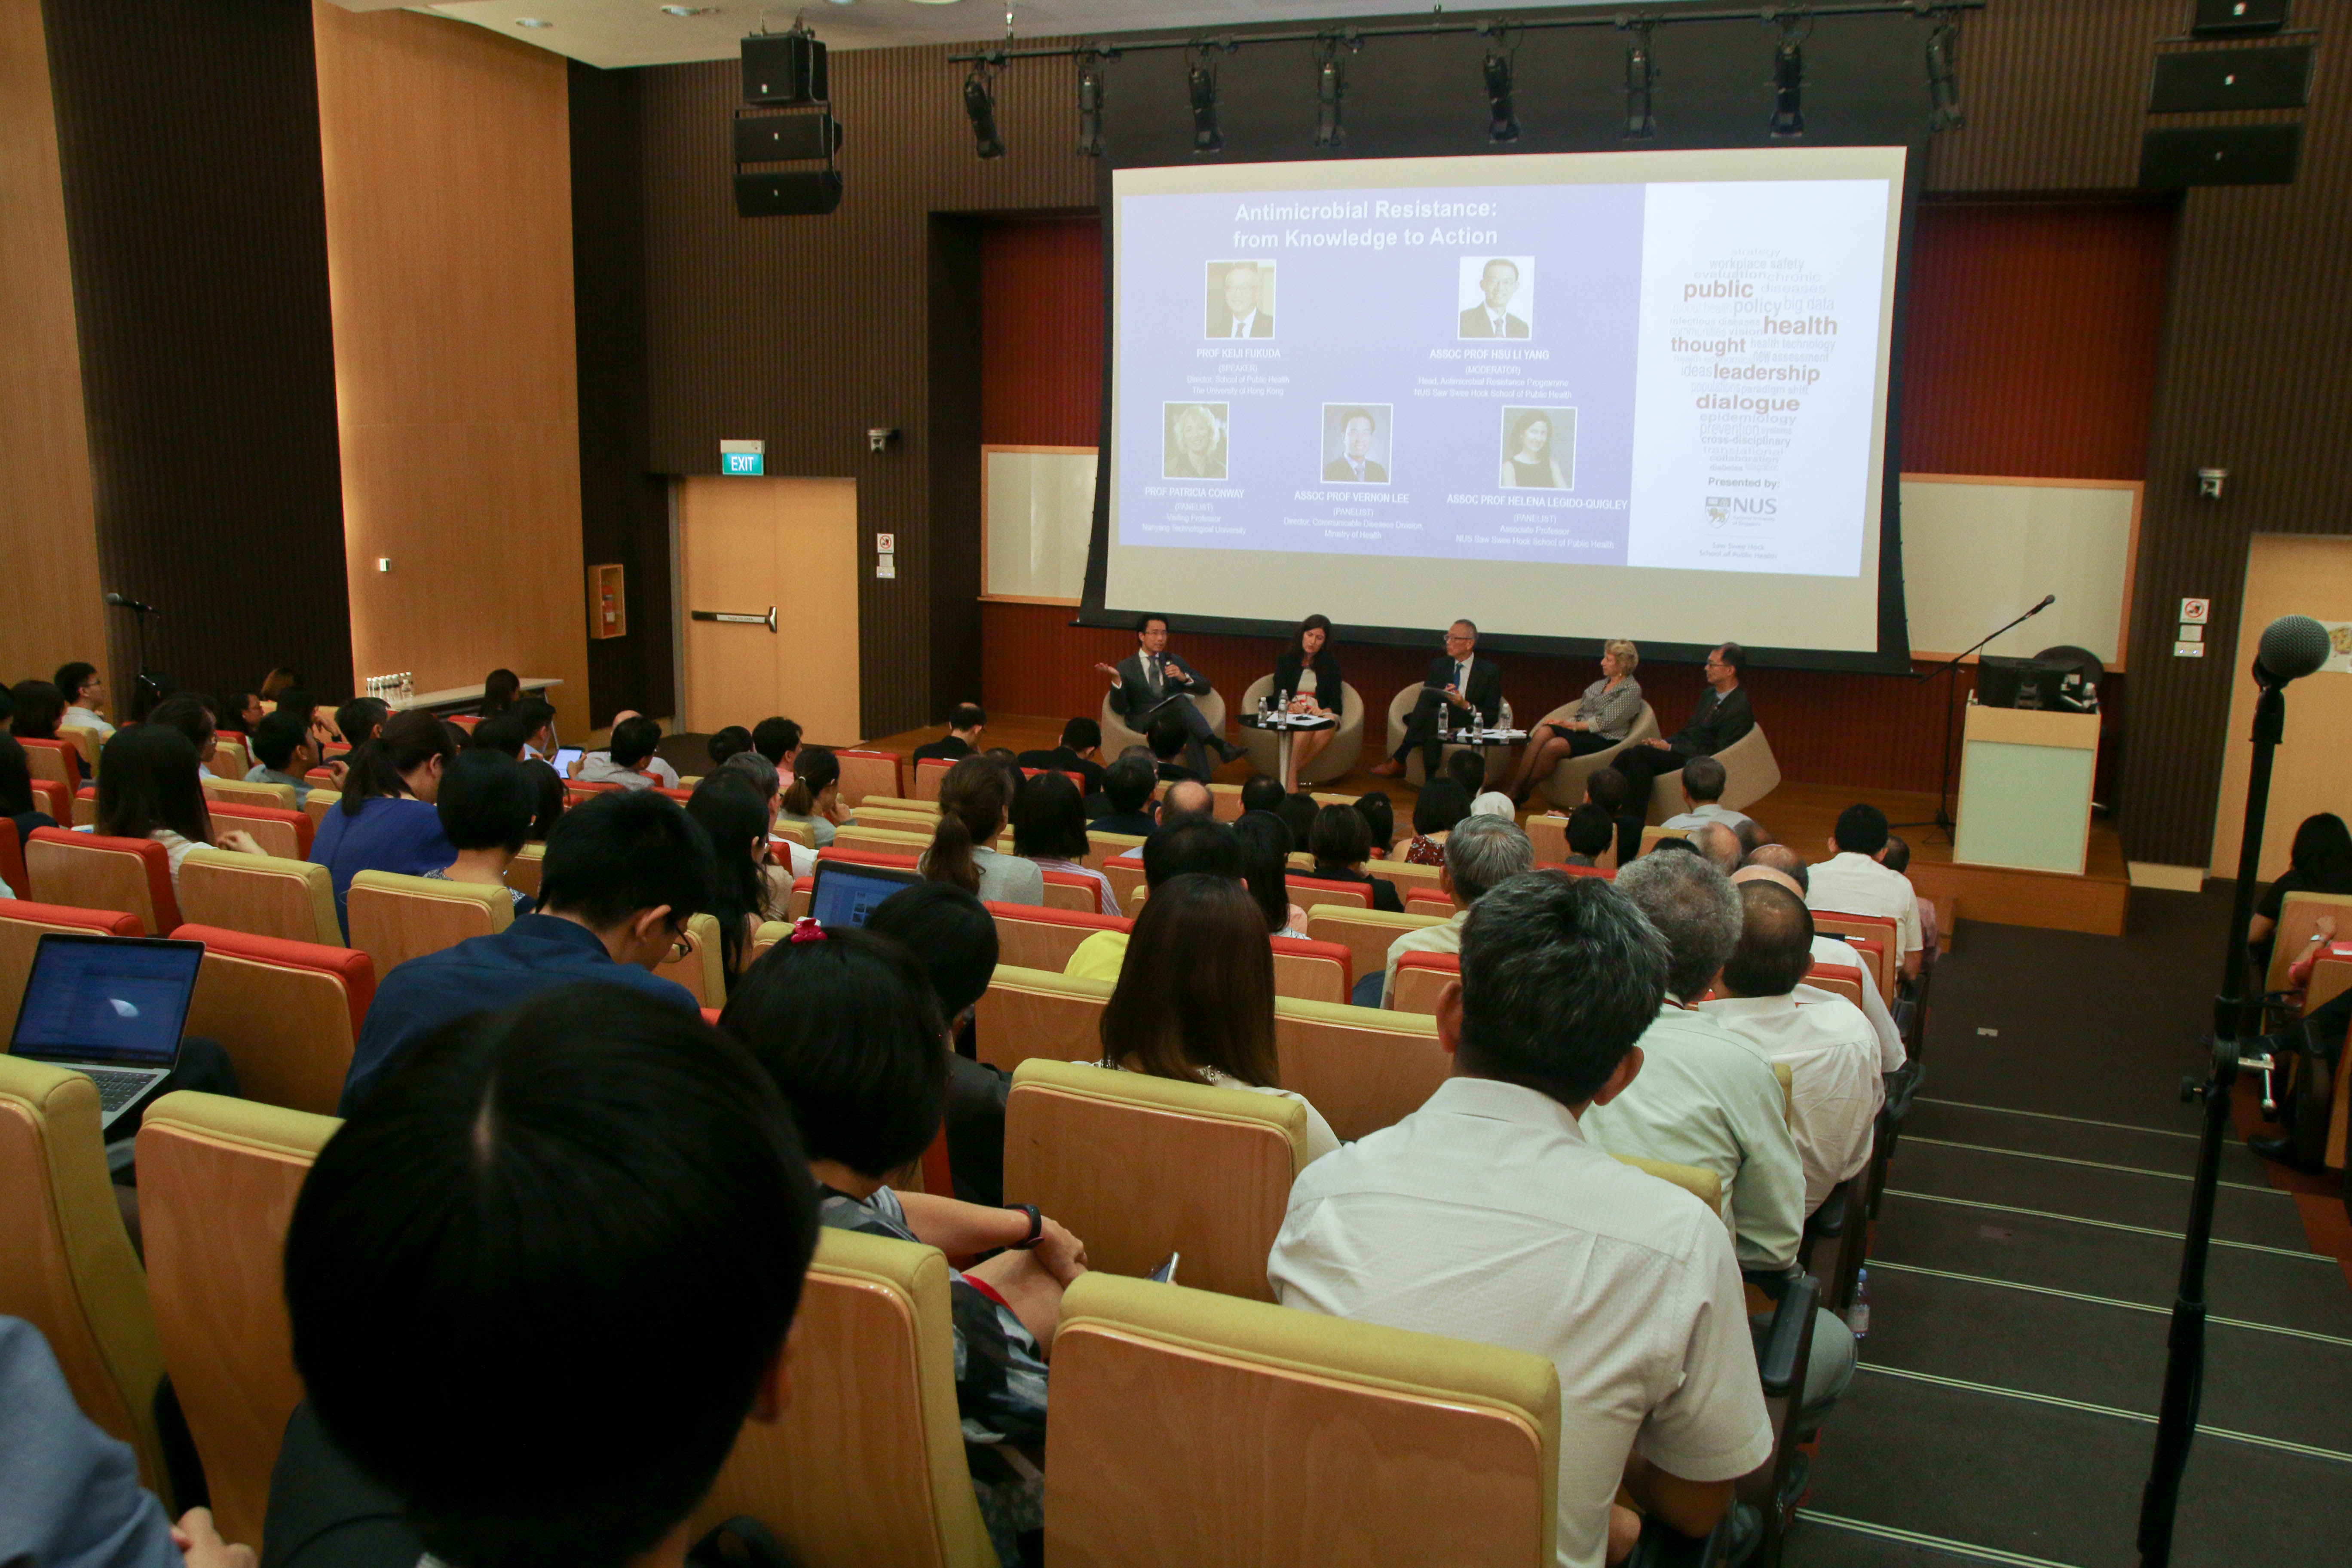 The panellist from left: A/Prof Vernon Lee, A/Prof Helena Legido-Quigley, Prof Keiji Fukuda, Prof Patricia Conway and A/Prof Hsu Li Yang.